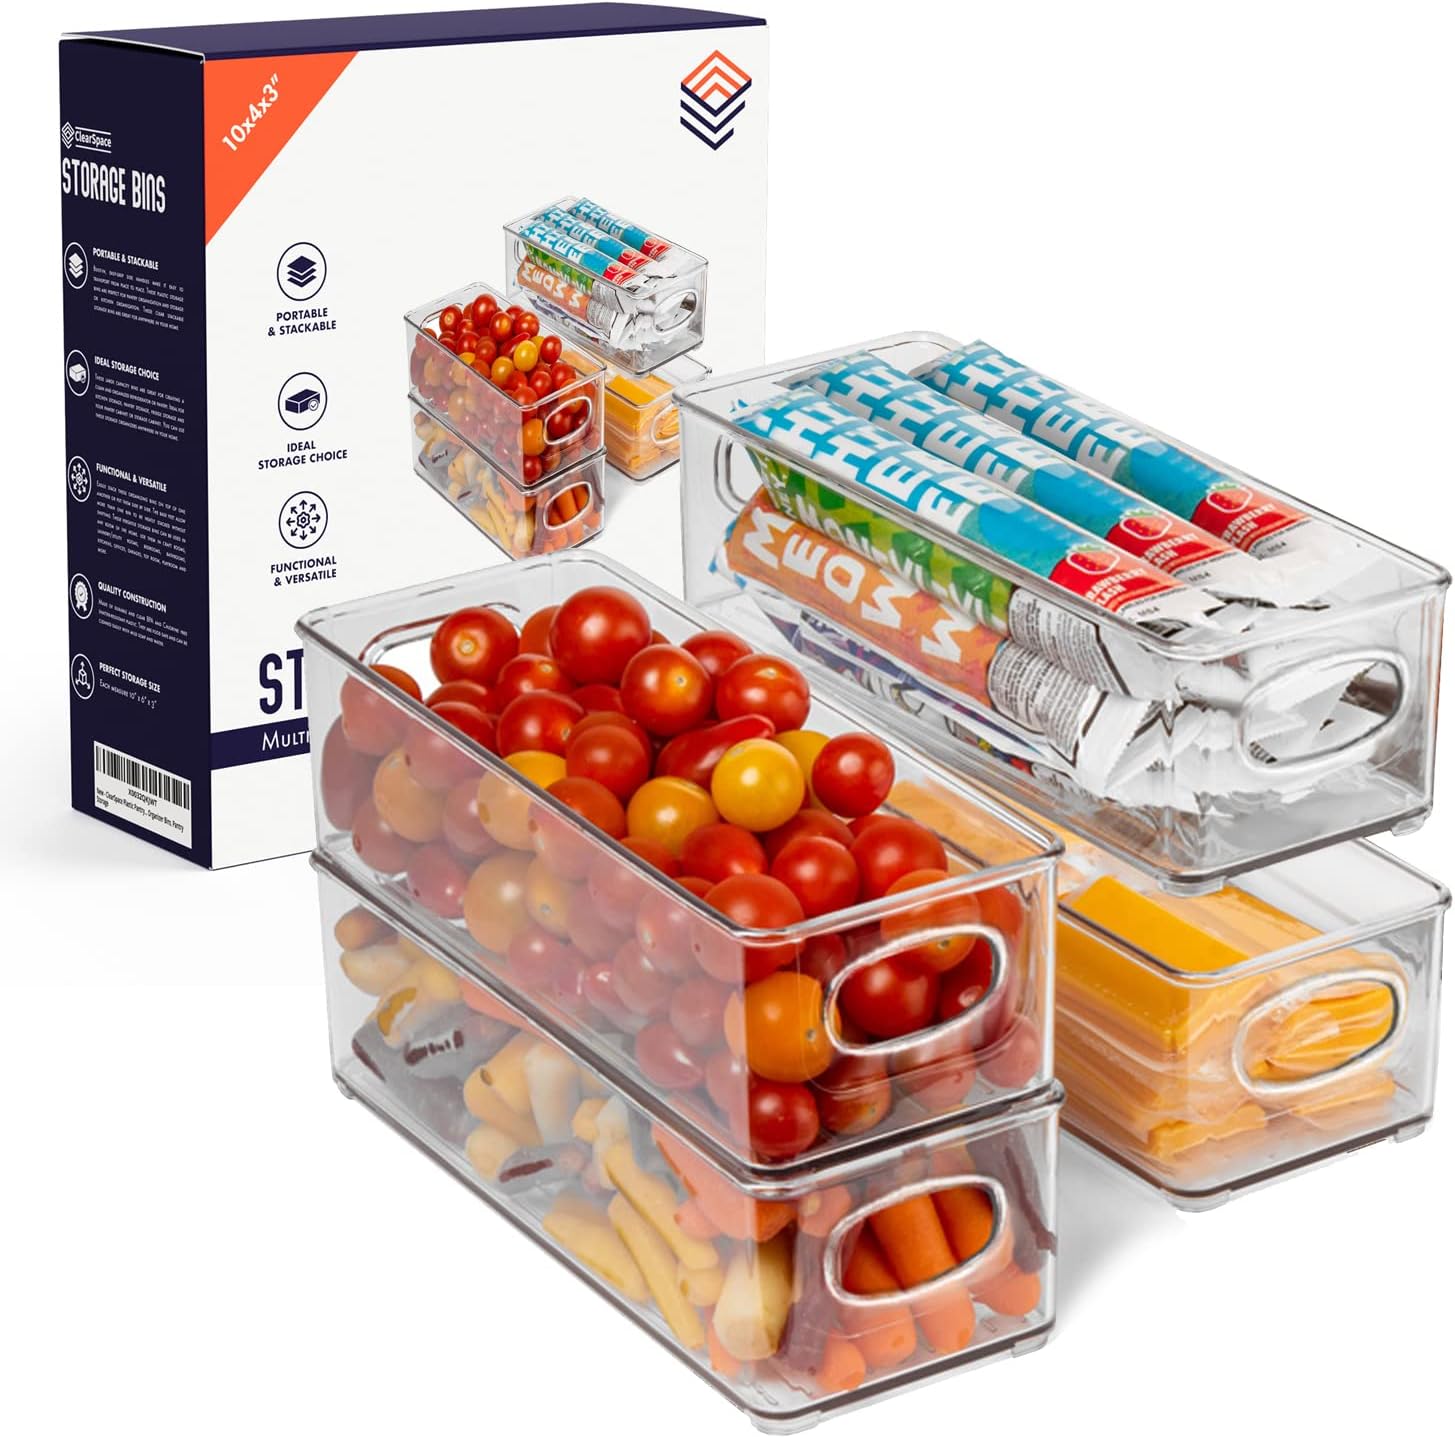 ClearSpace Plastic Pantry Organization and Food Storage Bin  Great Kitchen Storage  Fridge Organizer Bins  4 Pack